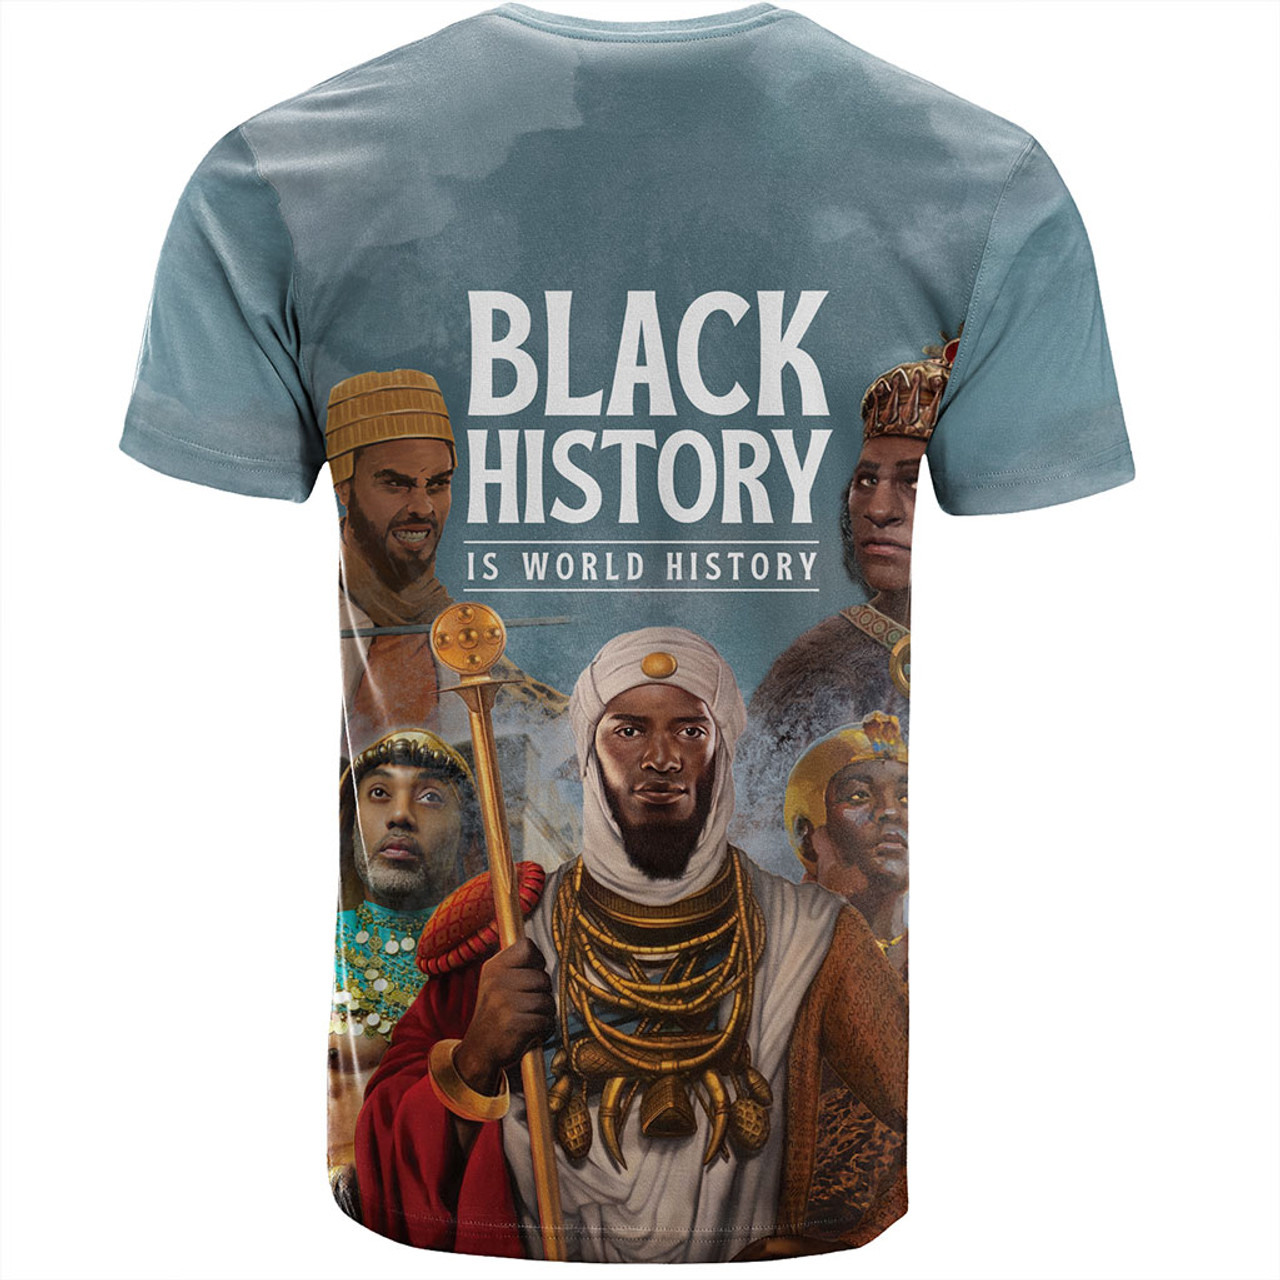 Black History T-Shirt Is World History